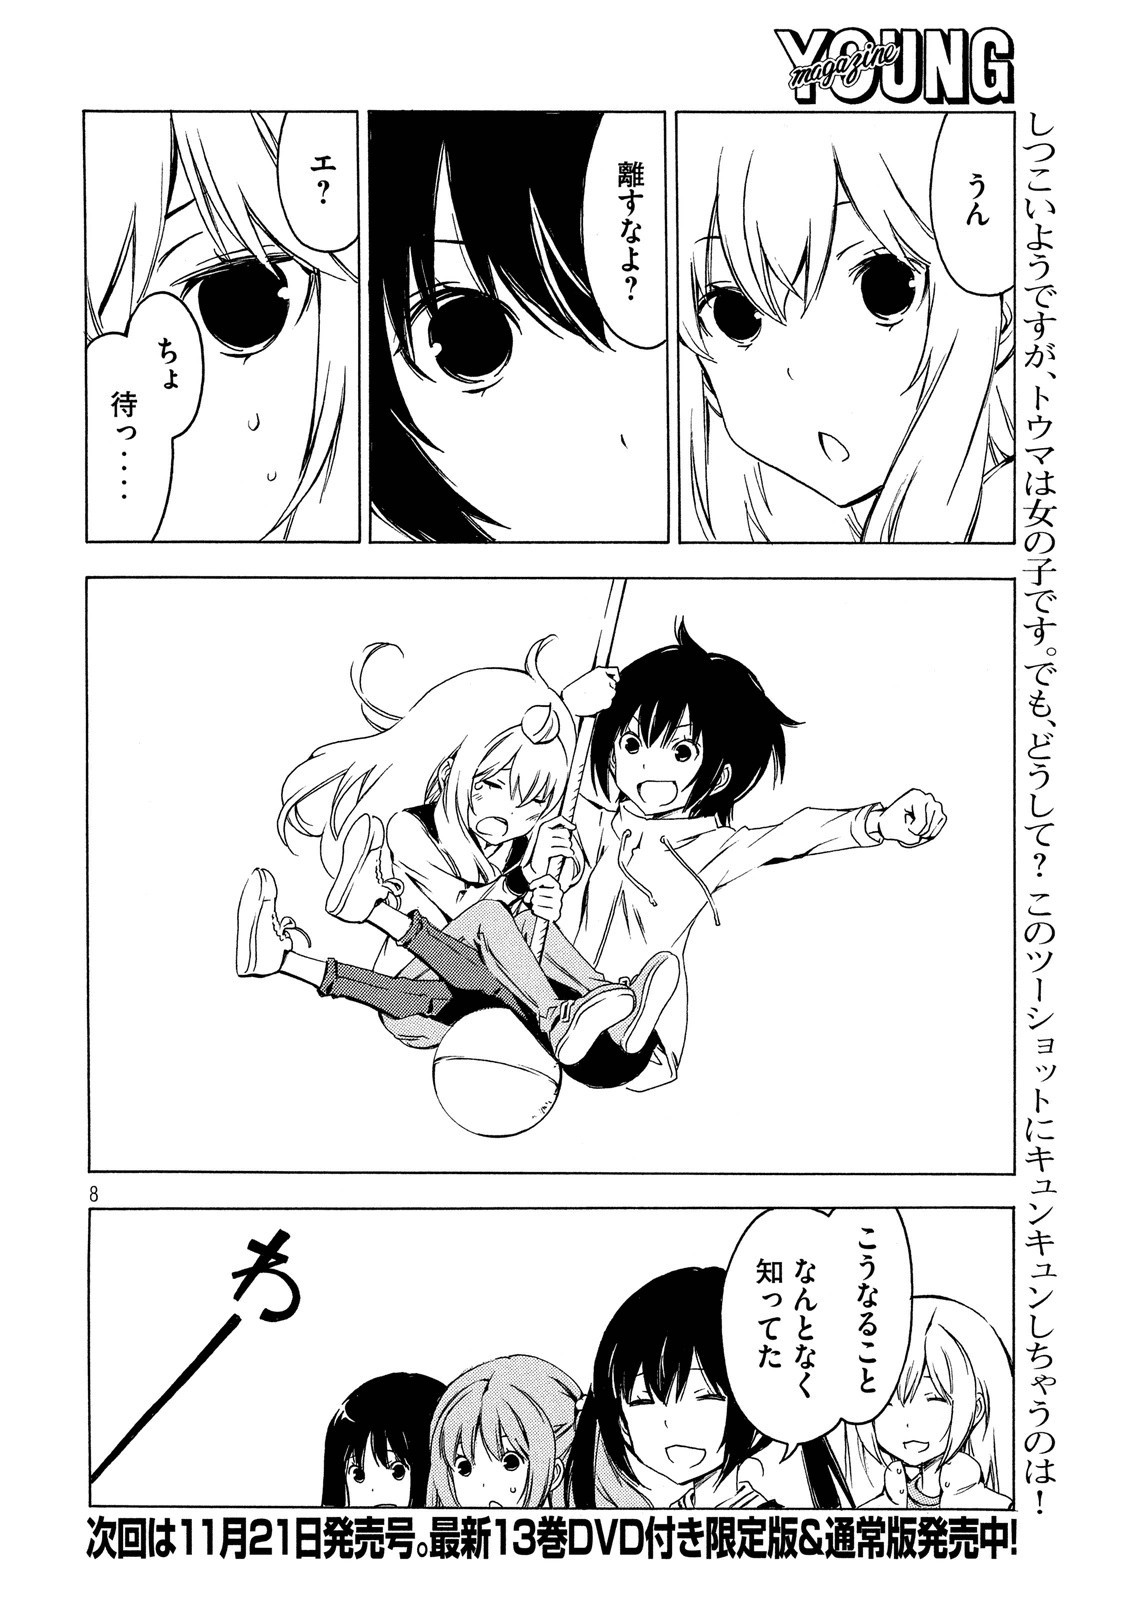 Minami-ke - Chapter 280 - Page 8